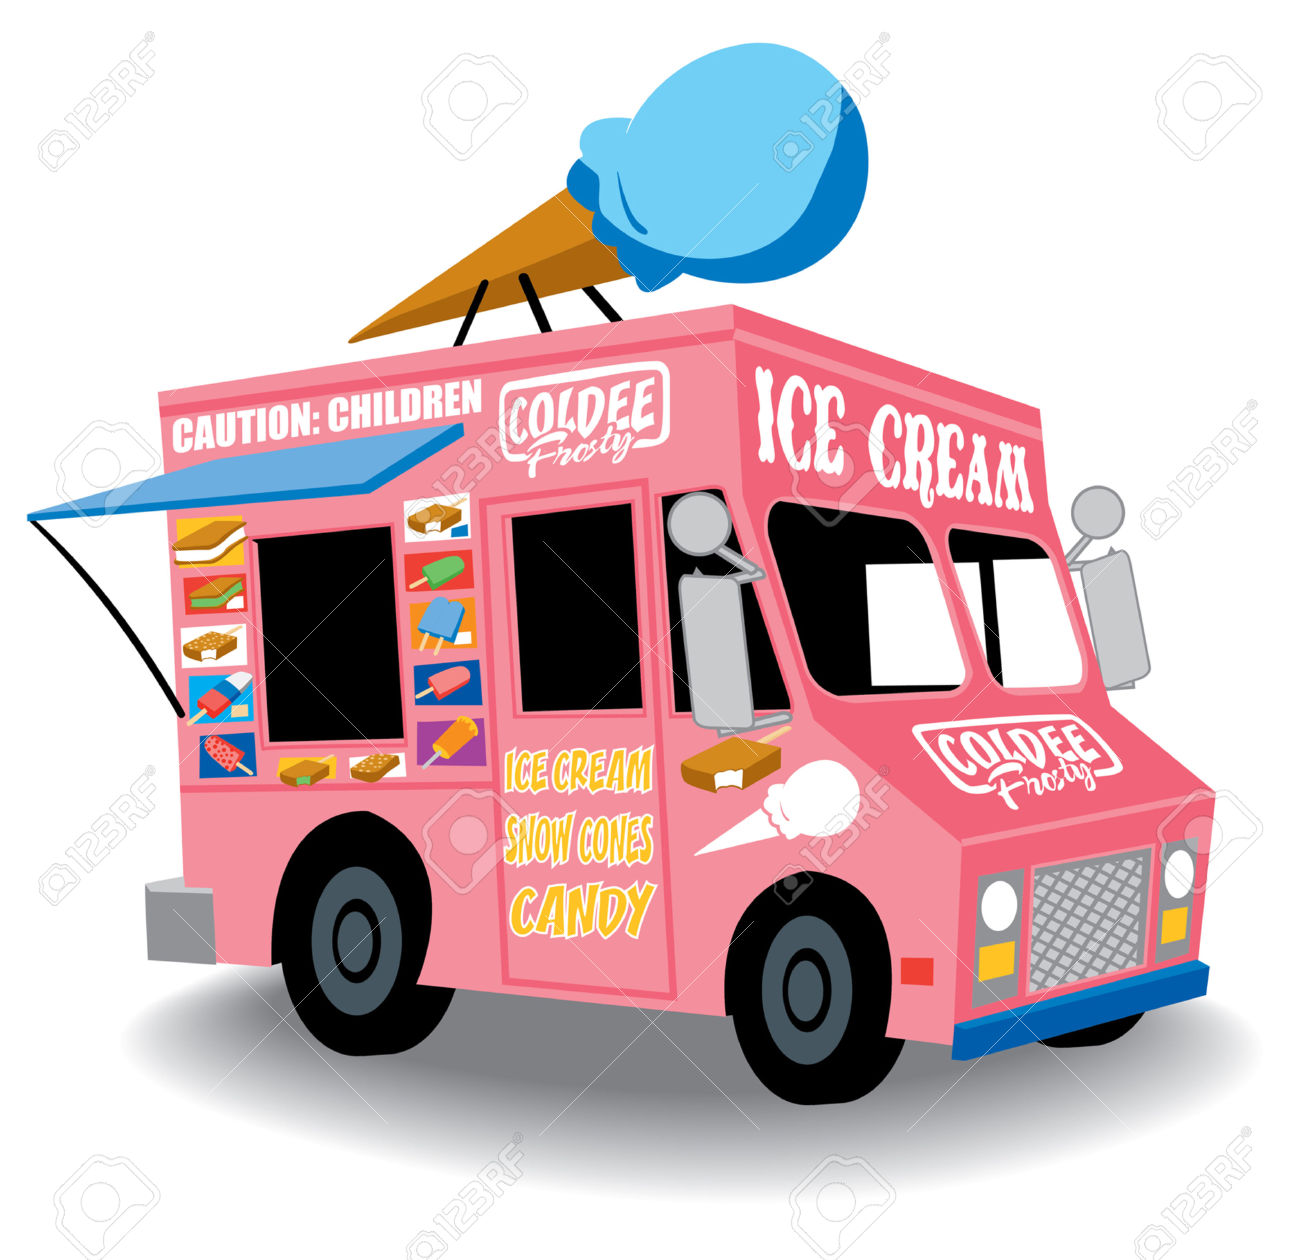 Ice cream truck clipart - .